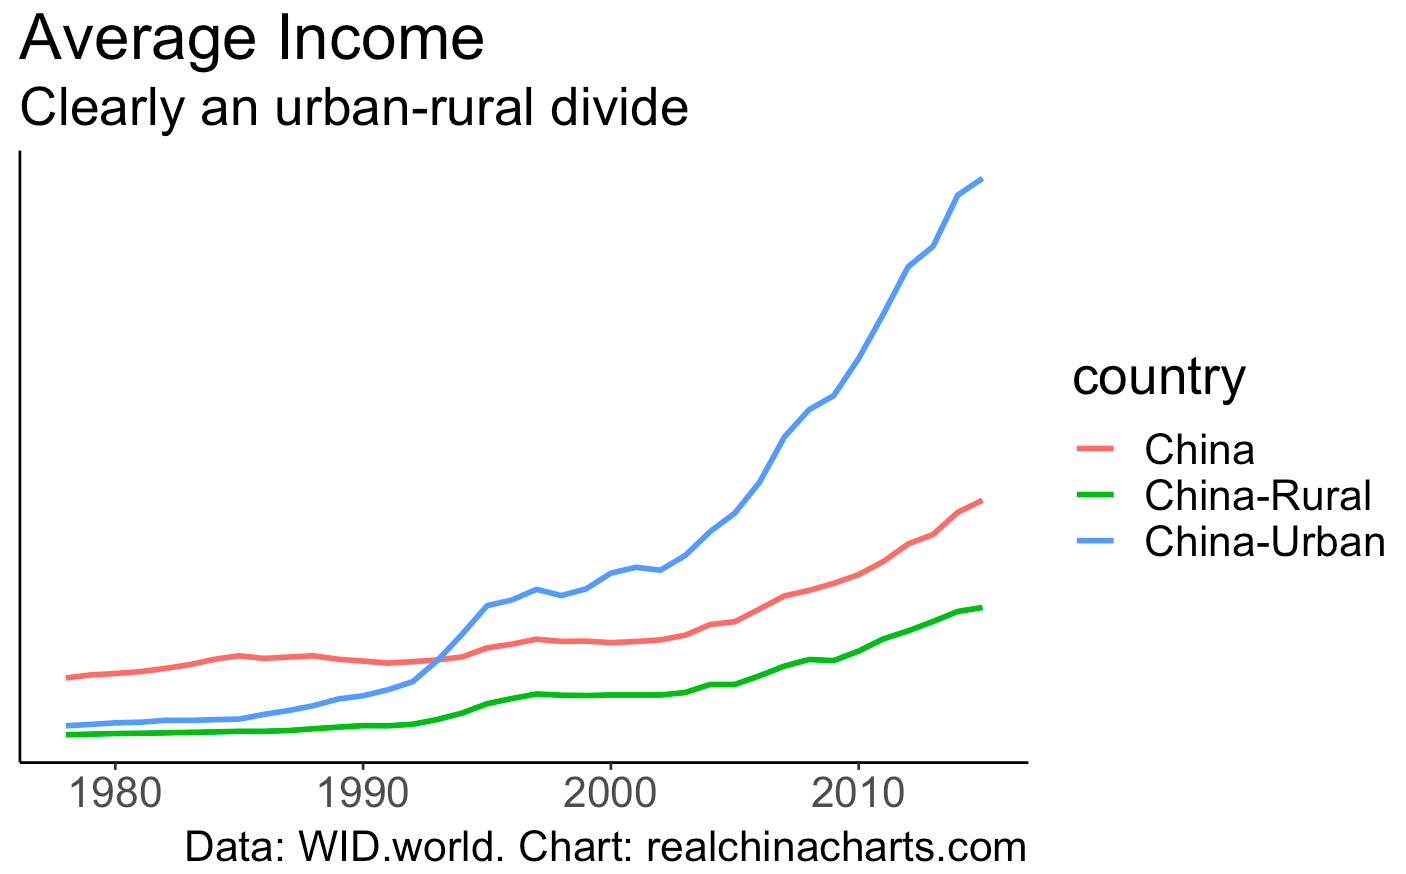 China's urban-rural divide, average income